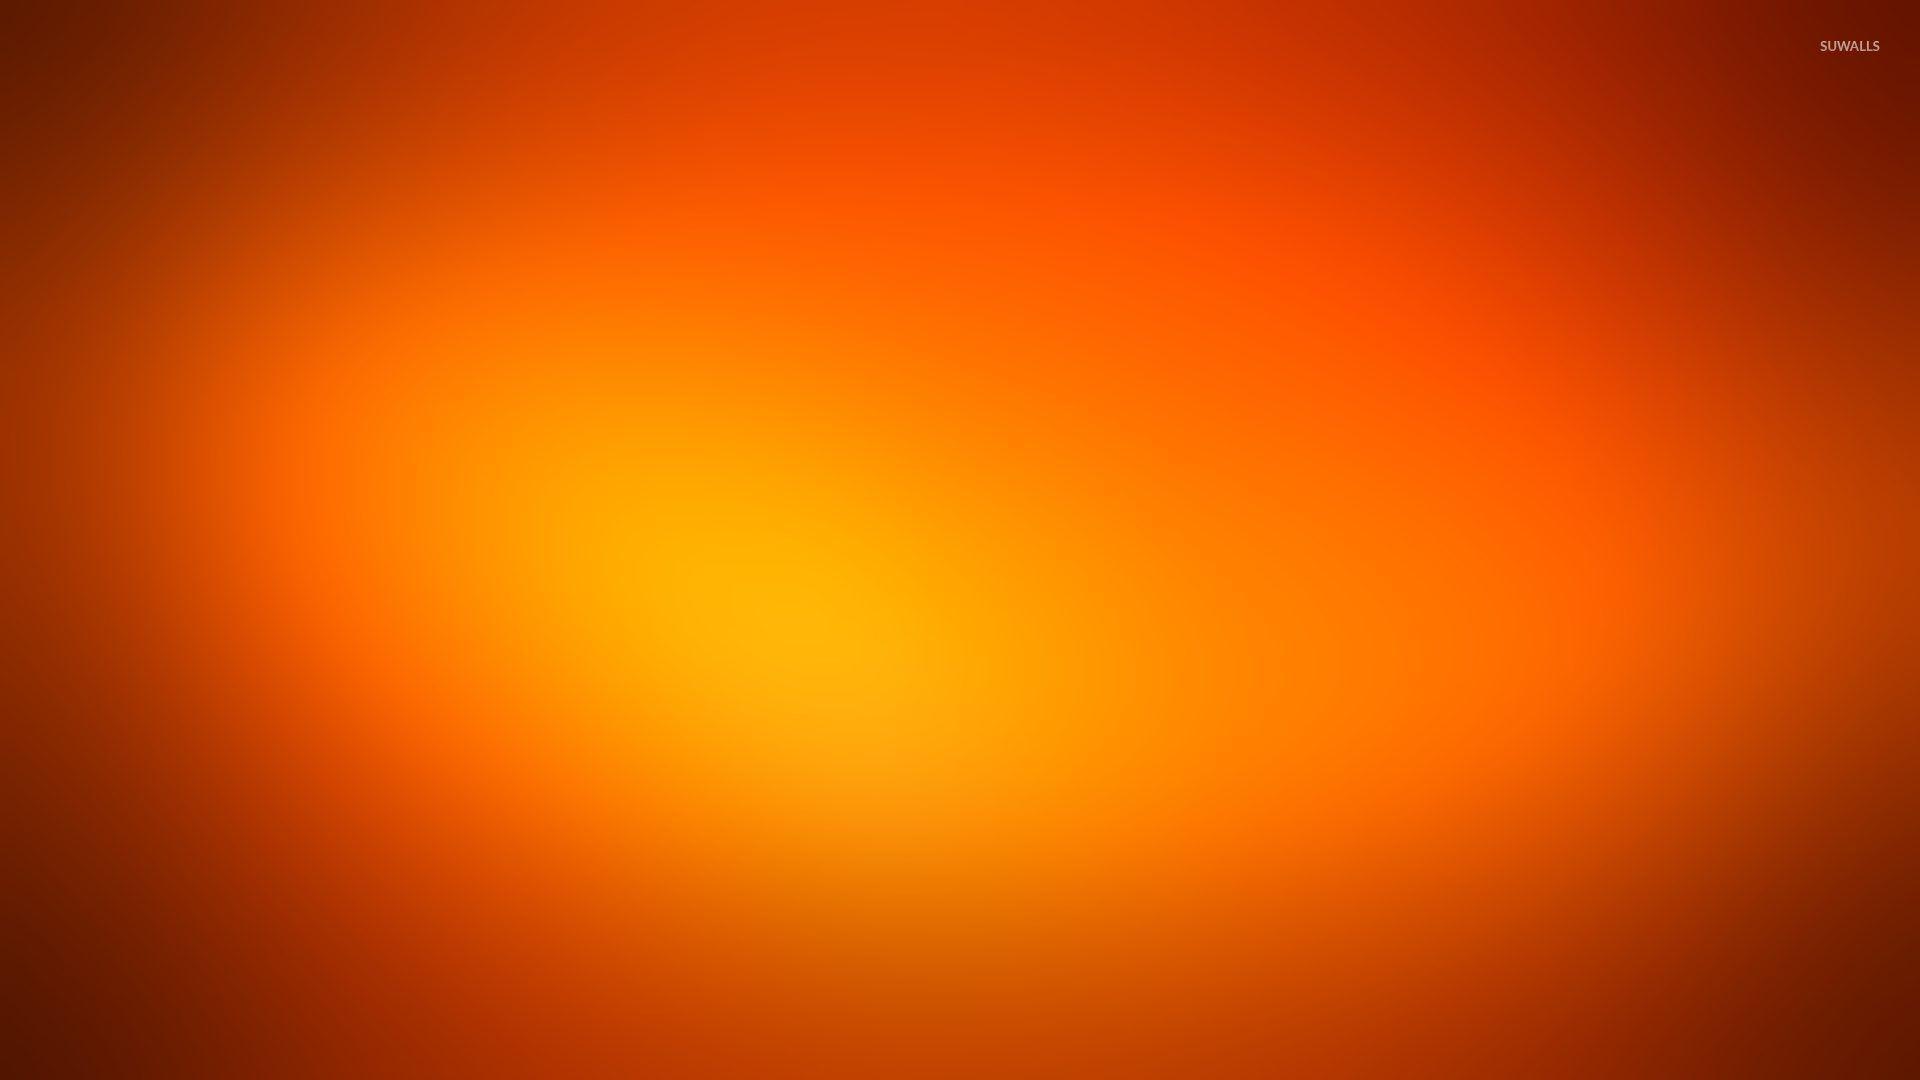 Abstract 4k background HD image orange gradient 26957 1920x1080